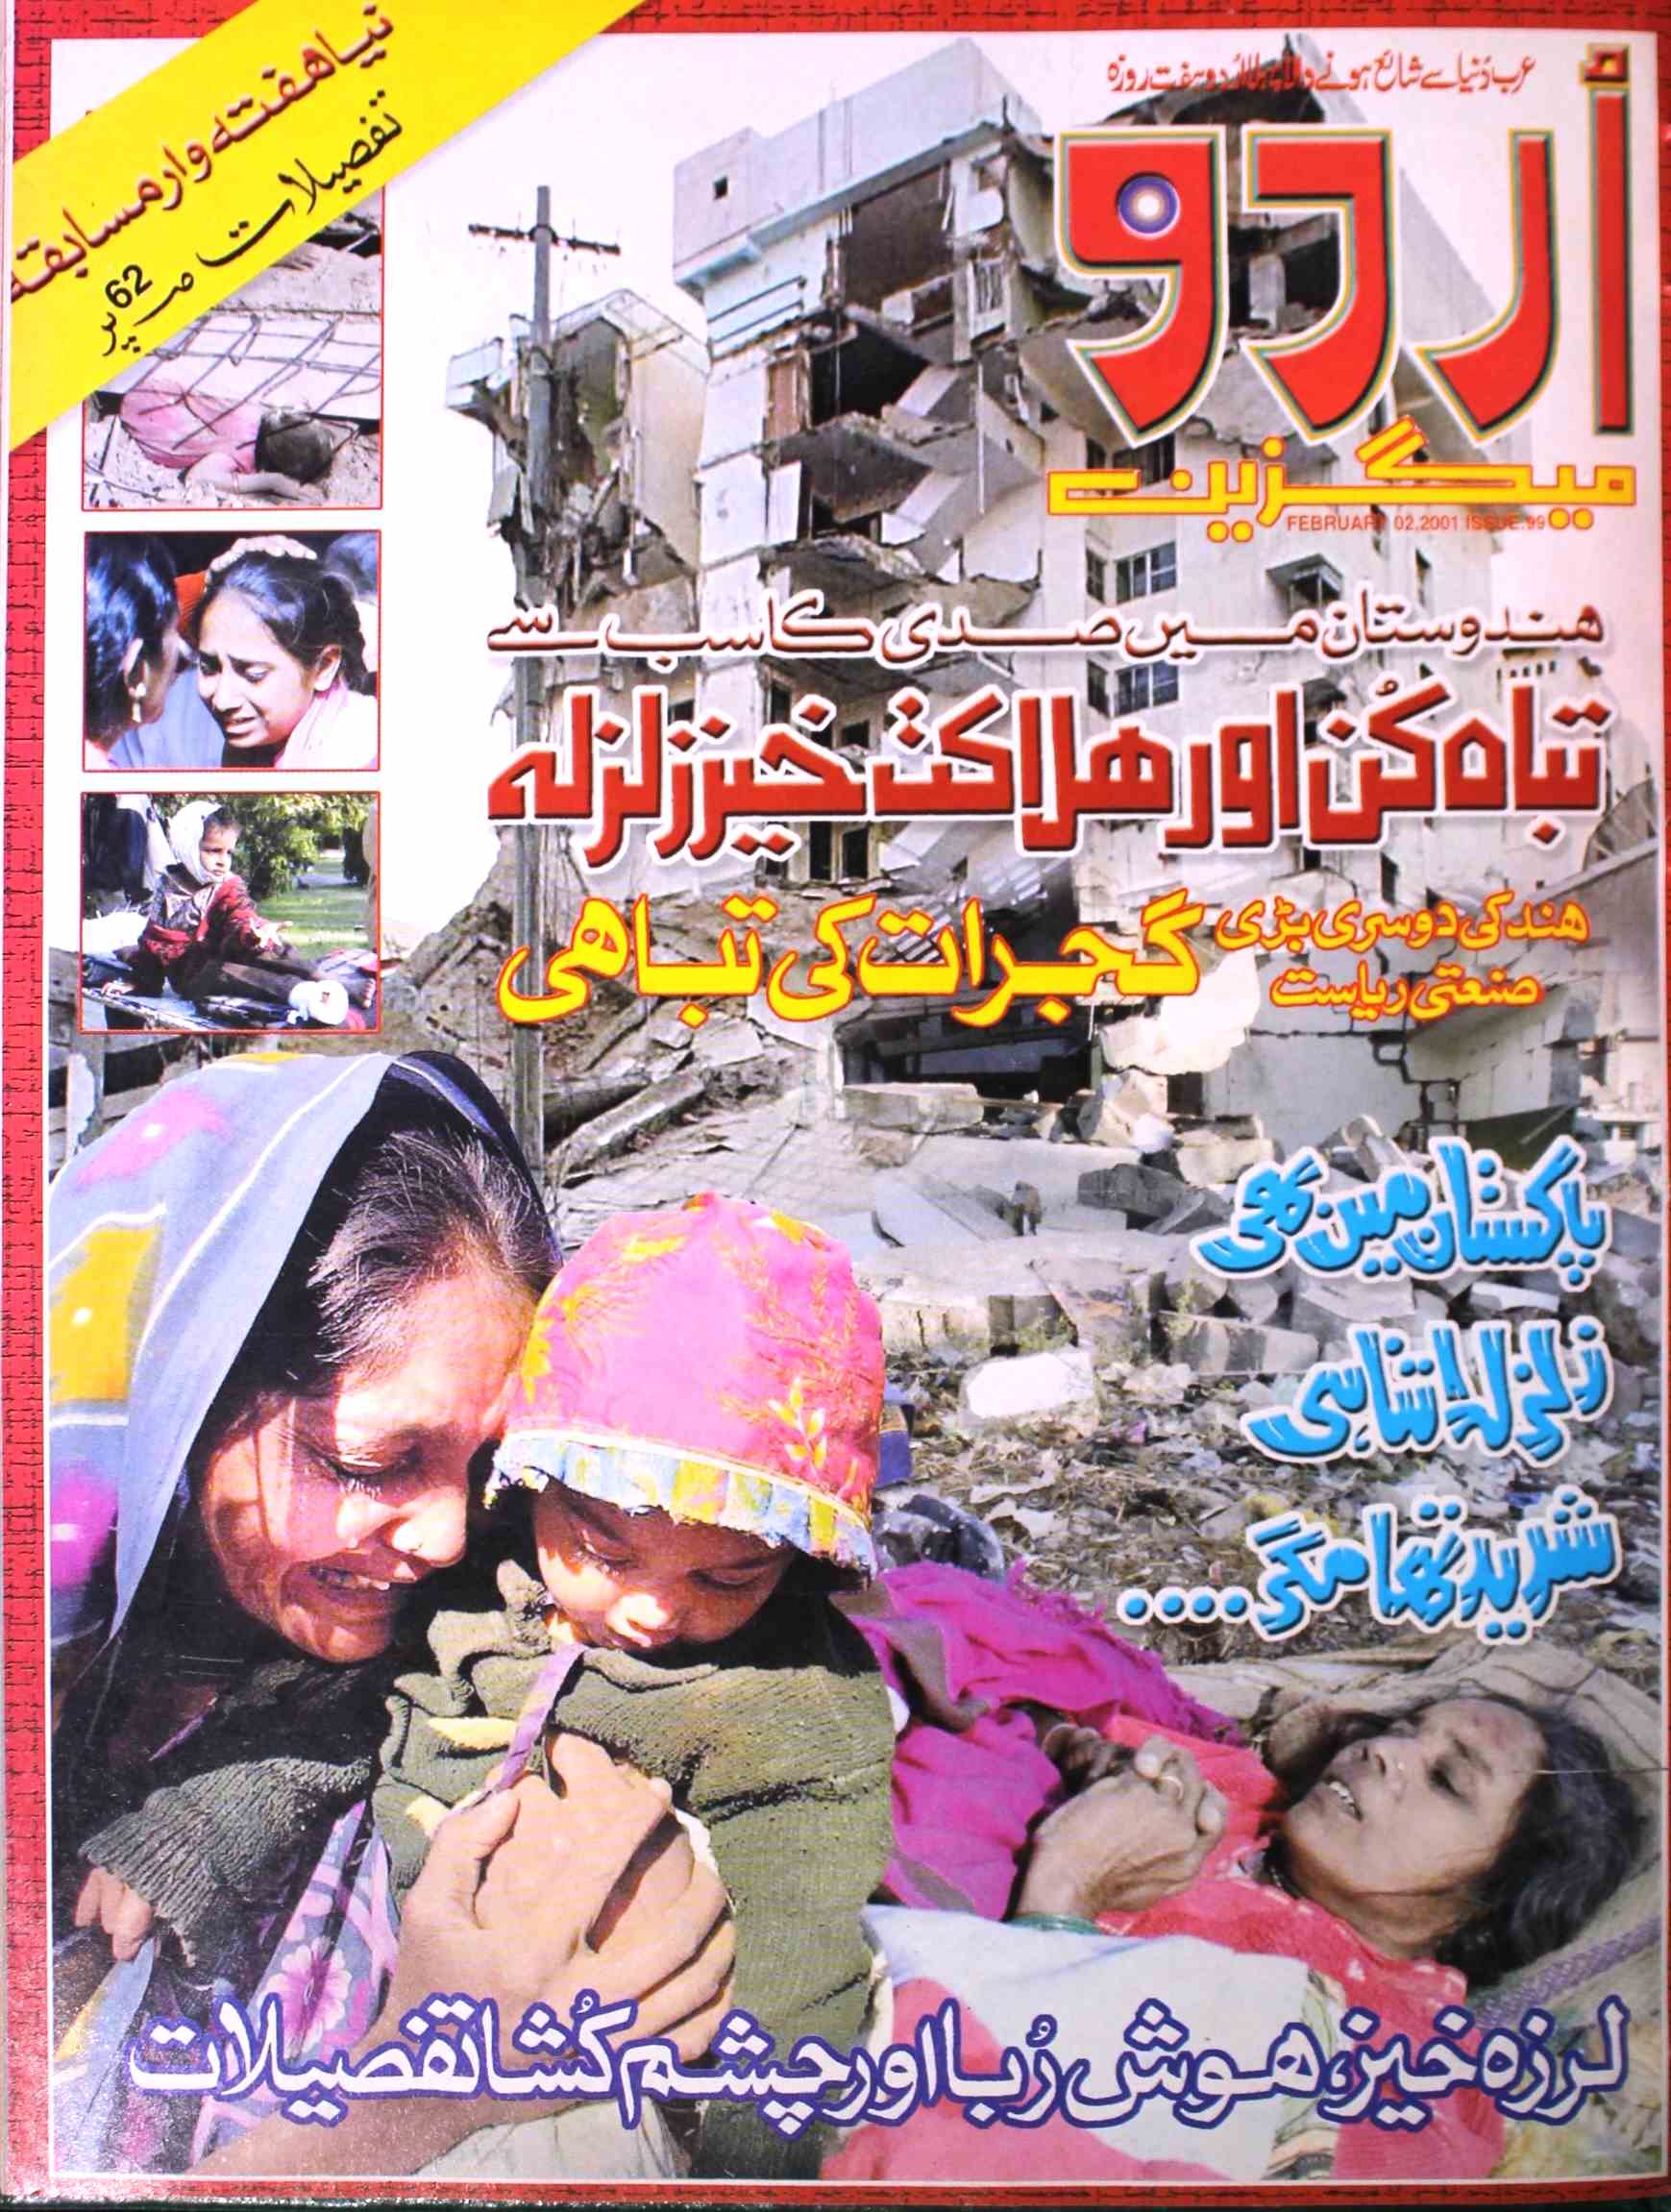 Urdu Magazine 02 Feb 2001